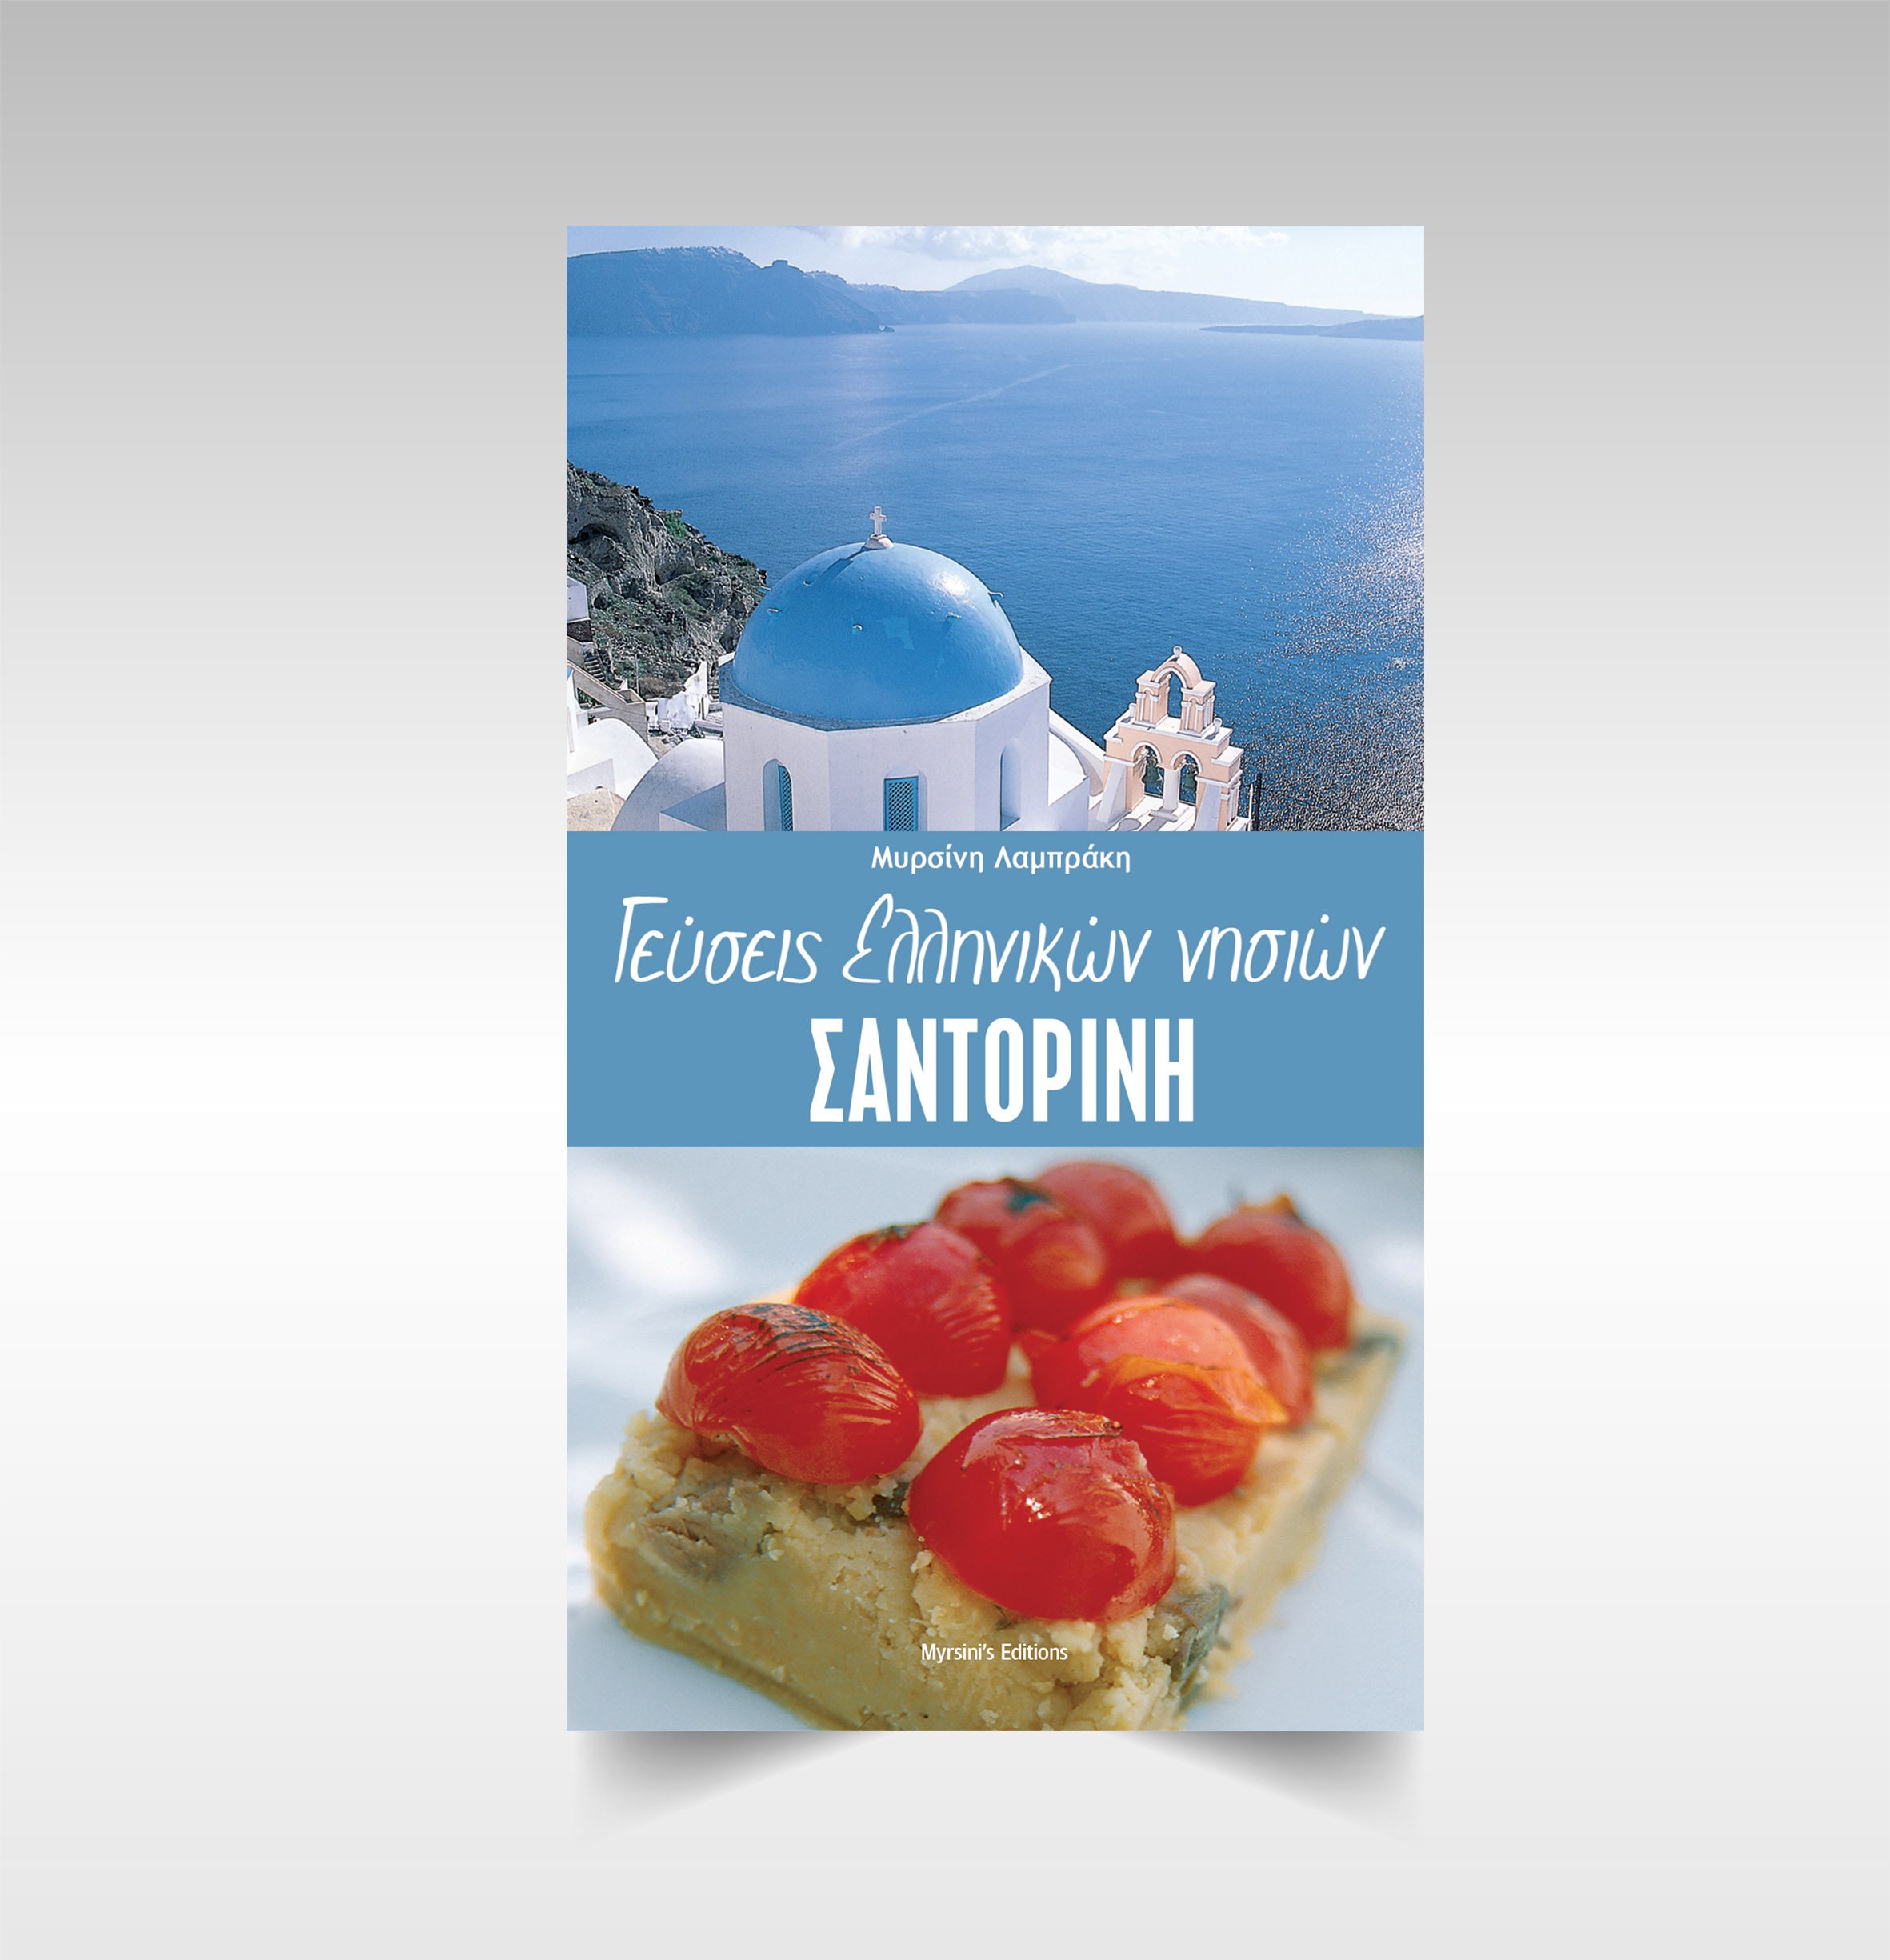 Santorini cooking book design